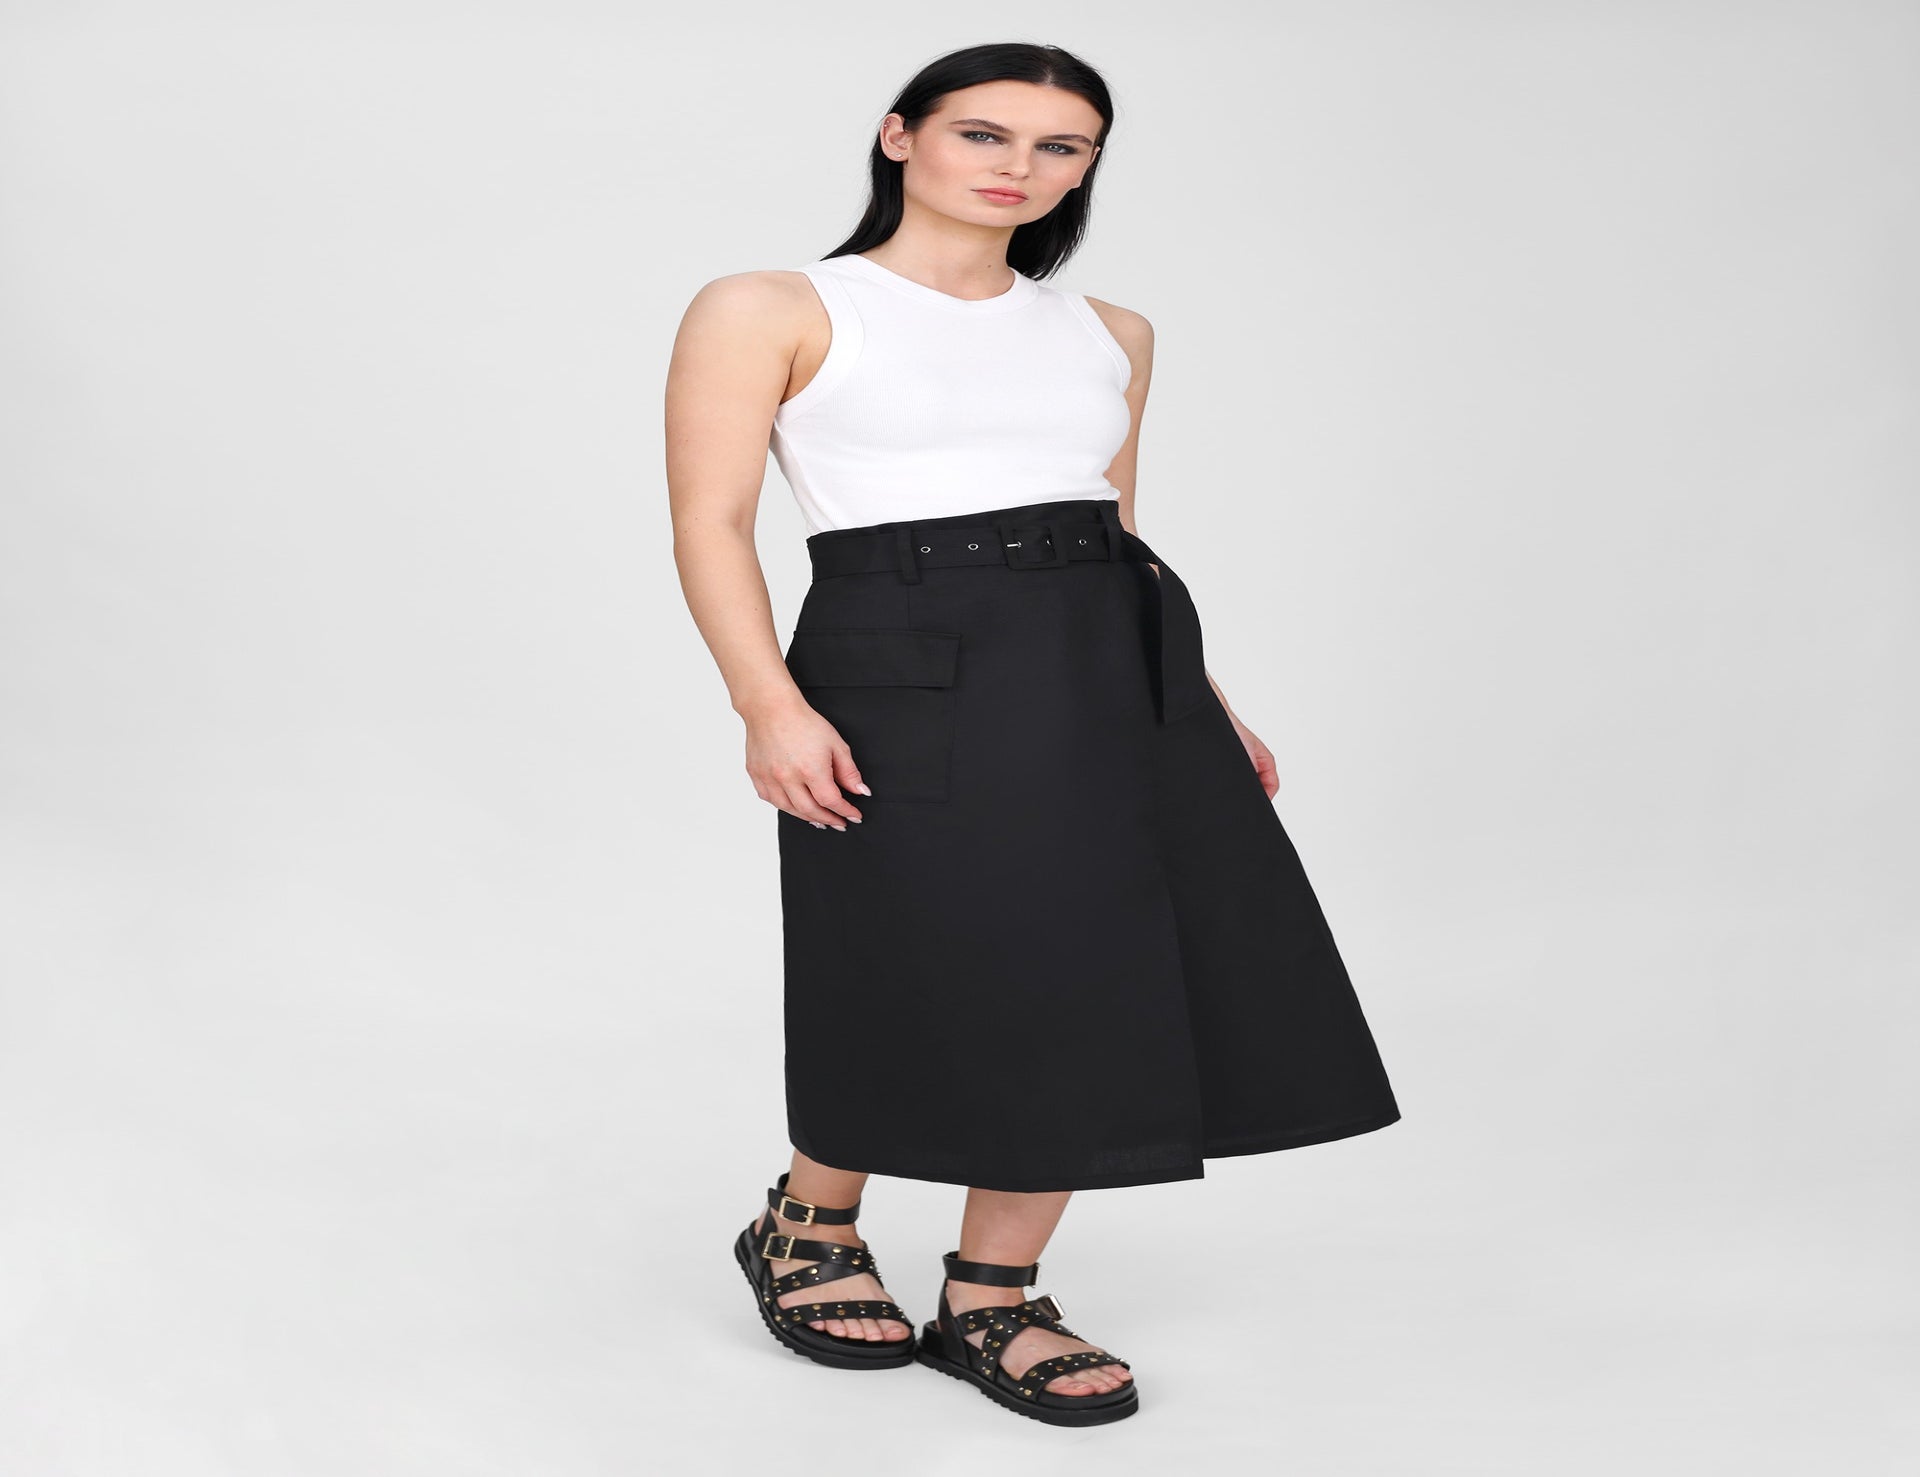 Belted Cargo Skirt - Black - Skirts - Long - Women's Clothing - Storm